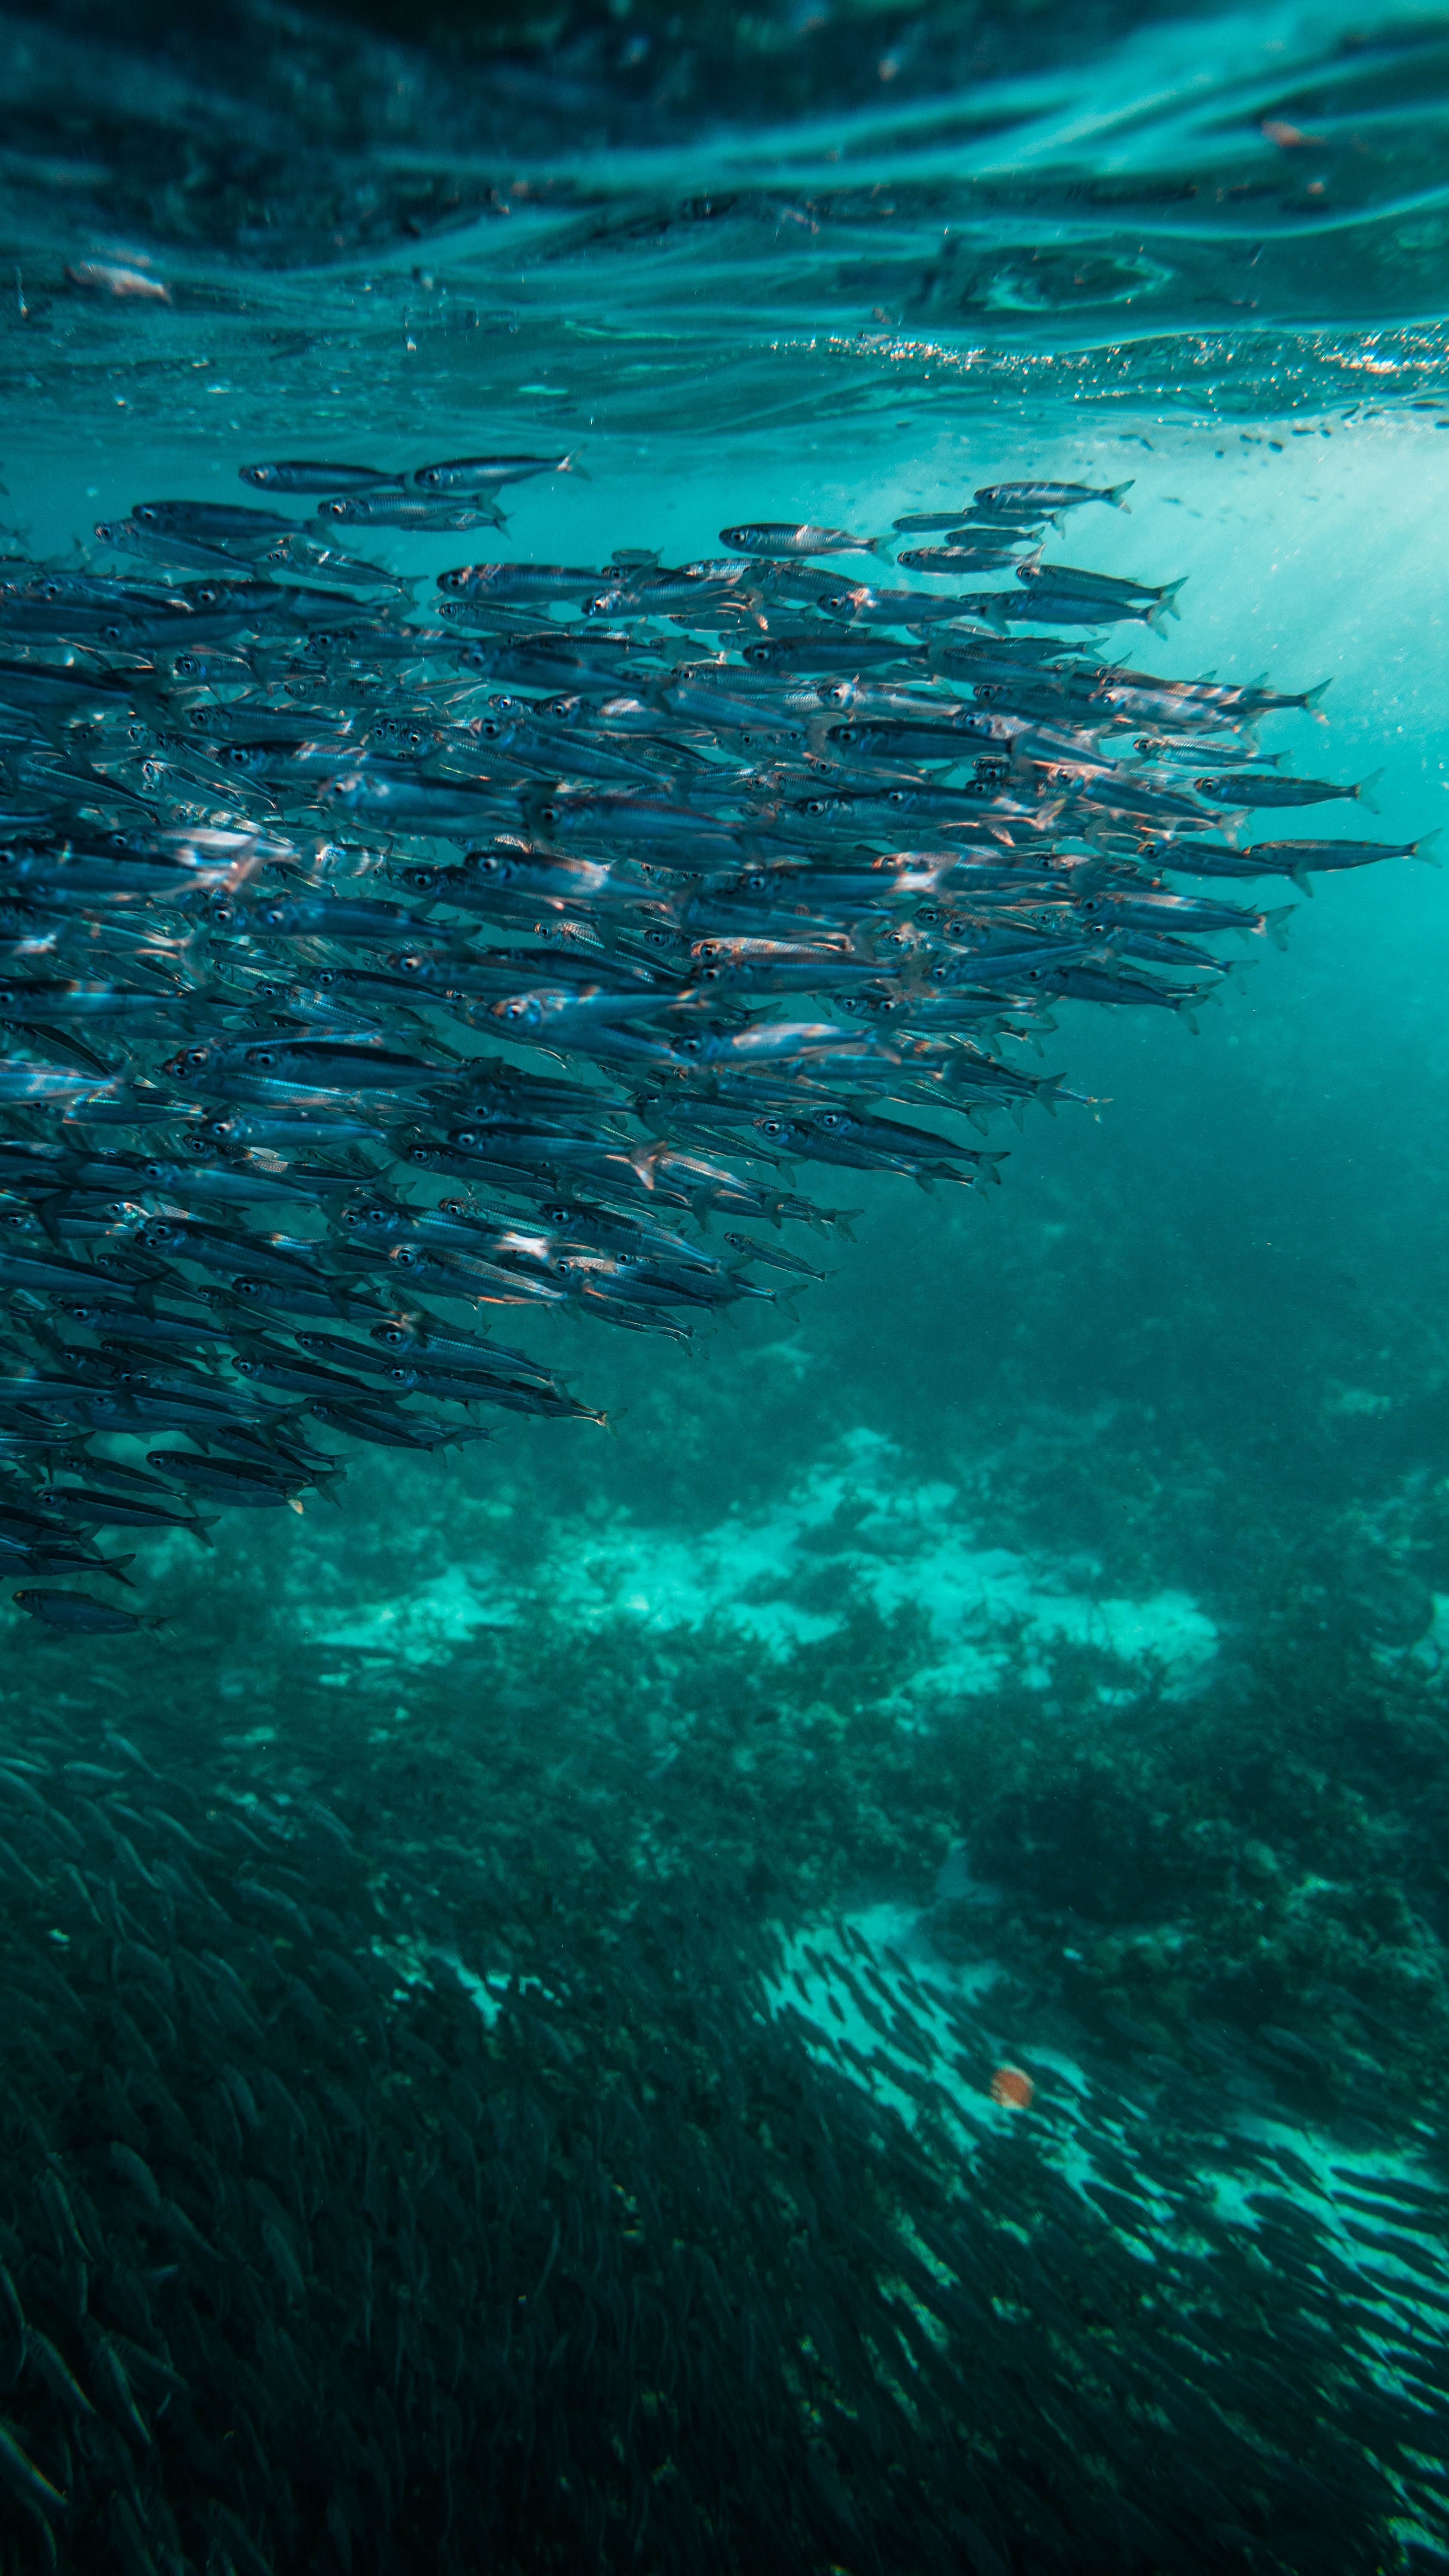 A school of fish swimming in the ocean - Underwater